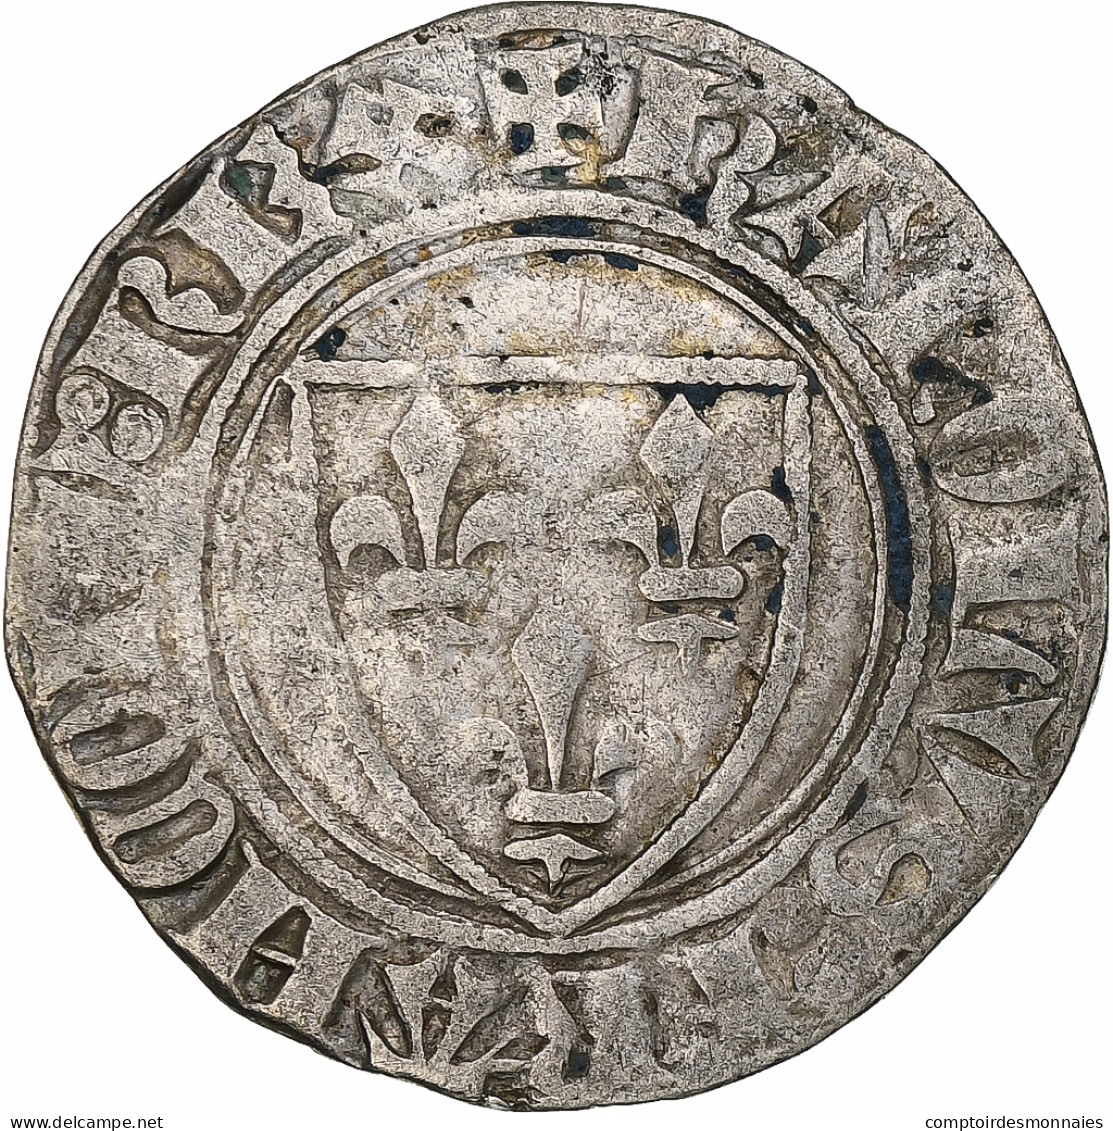 France, Charles VI, Blanc Guénar, 1380-1422, Atelier Incertain, Billon, TB+ - 1380-1422 Charles VI Le Fol